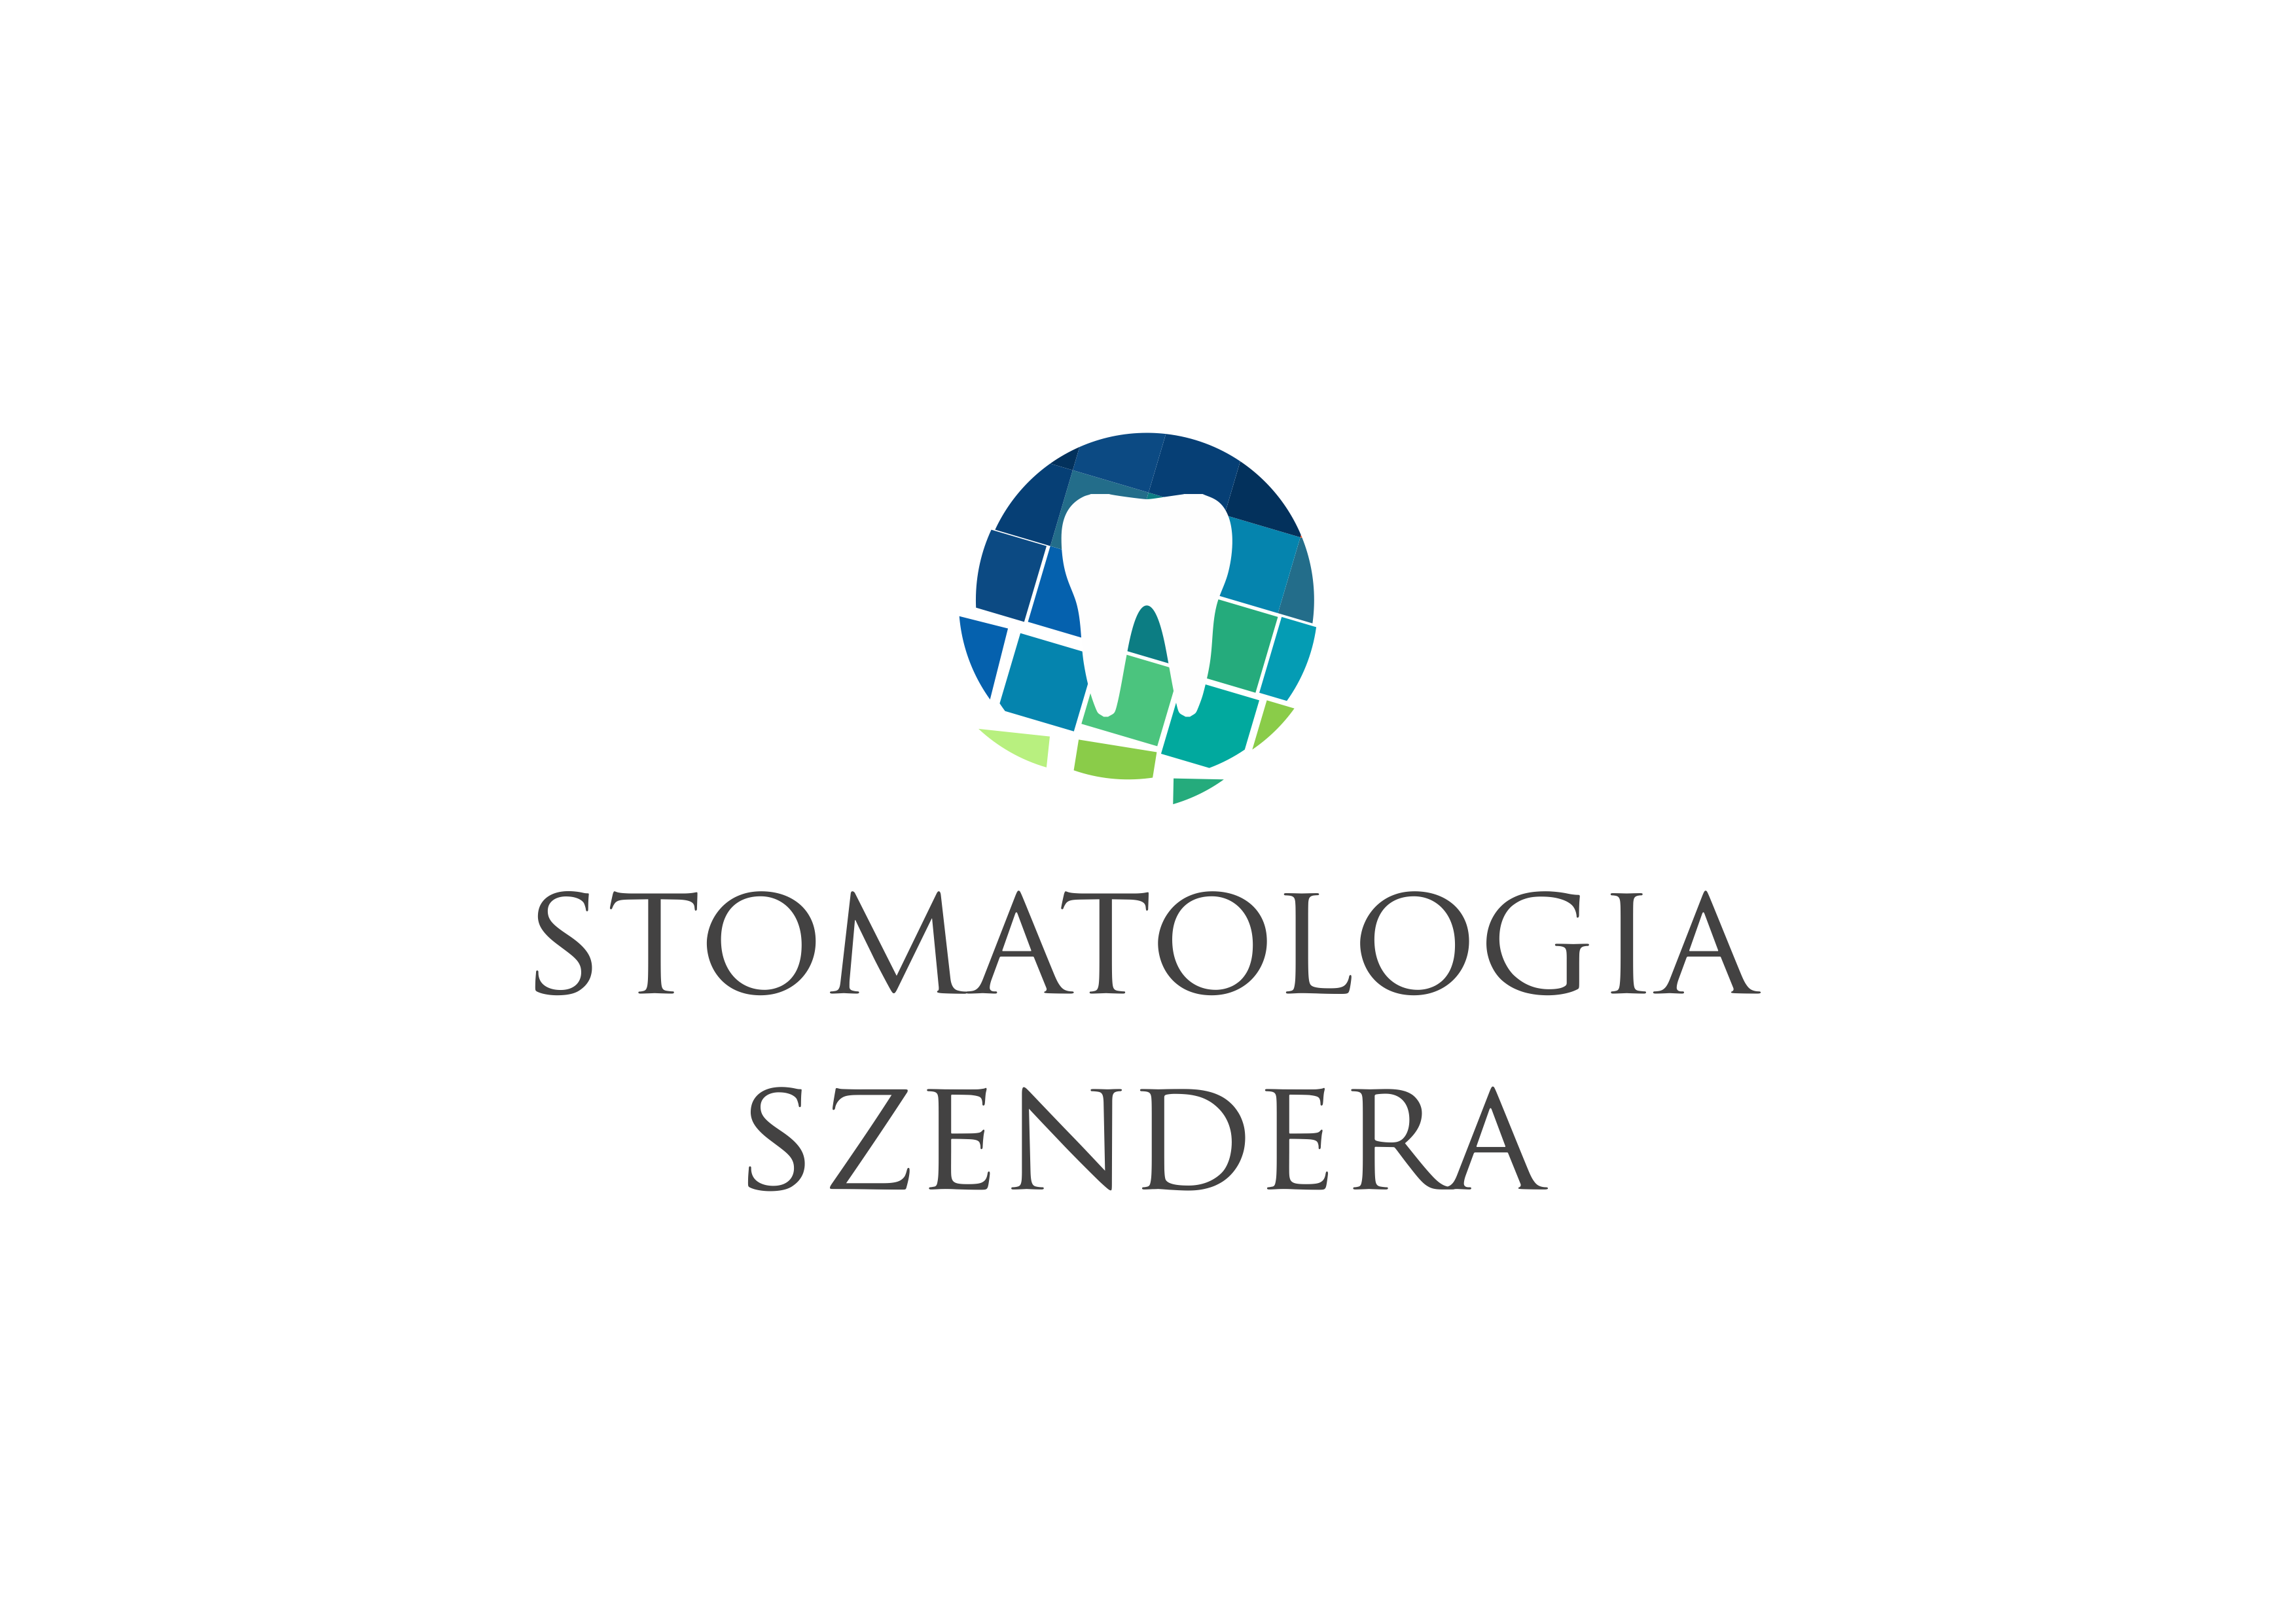 Stomatologia Szendera